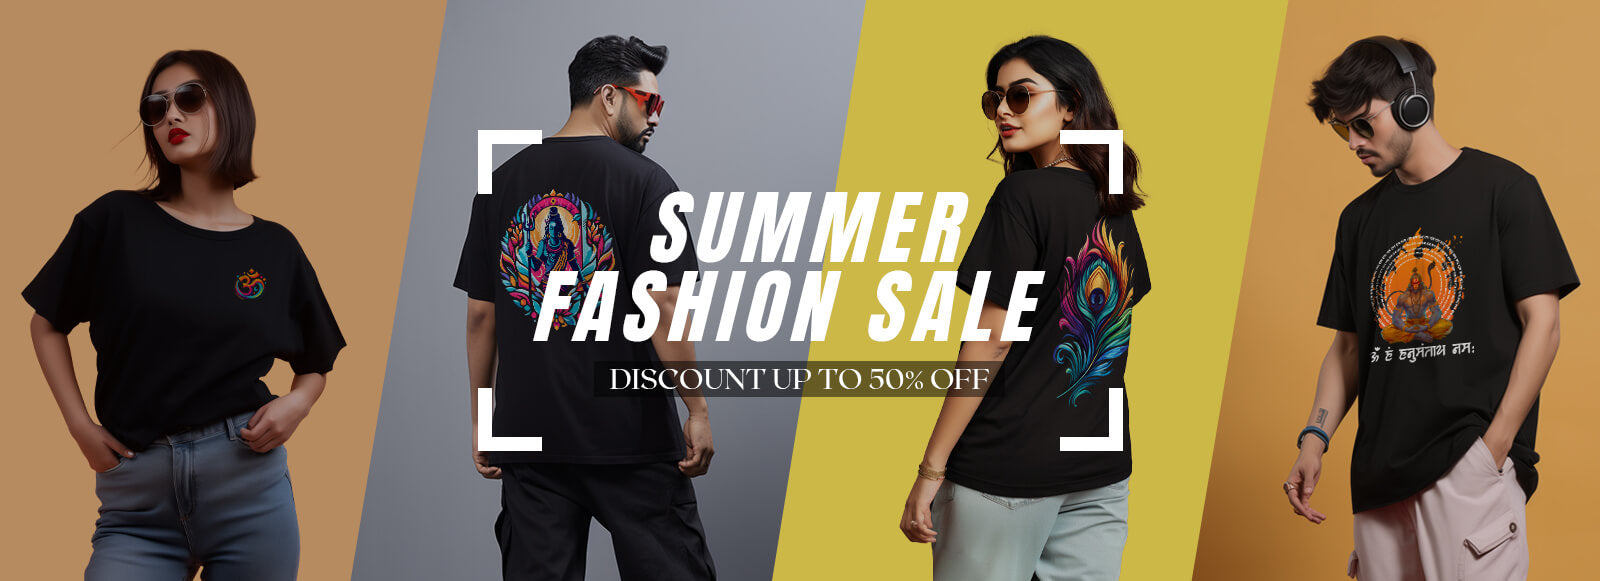 summer-fashion-sale